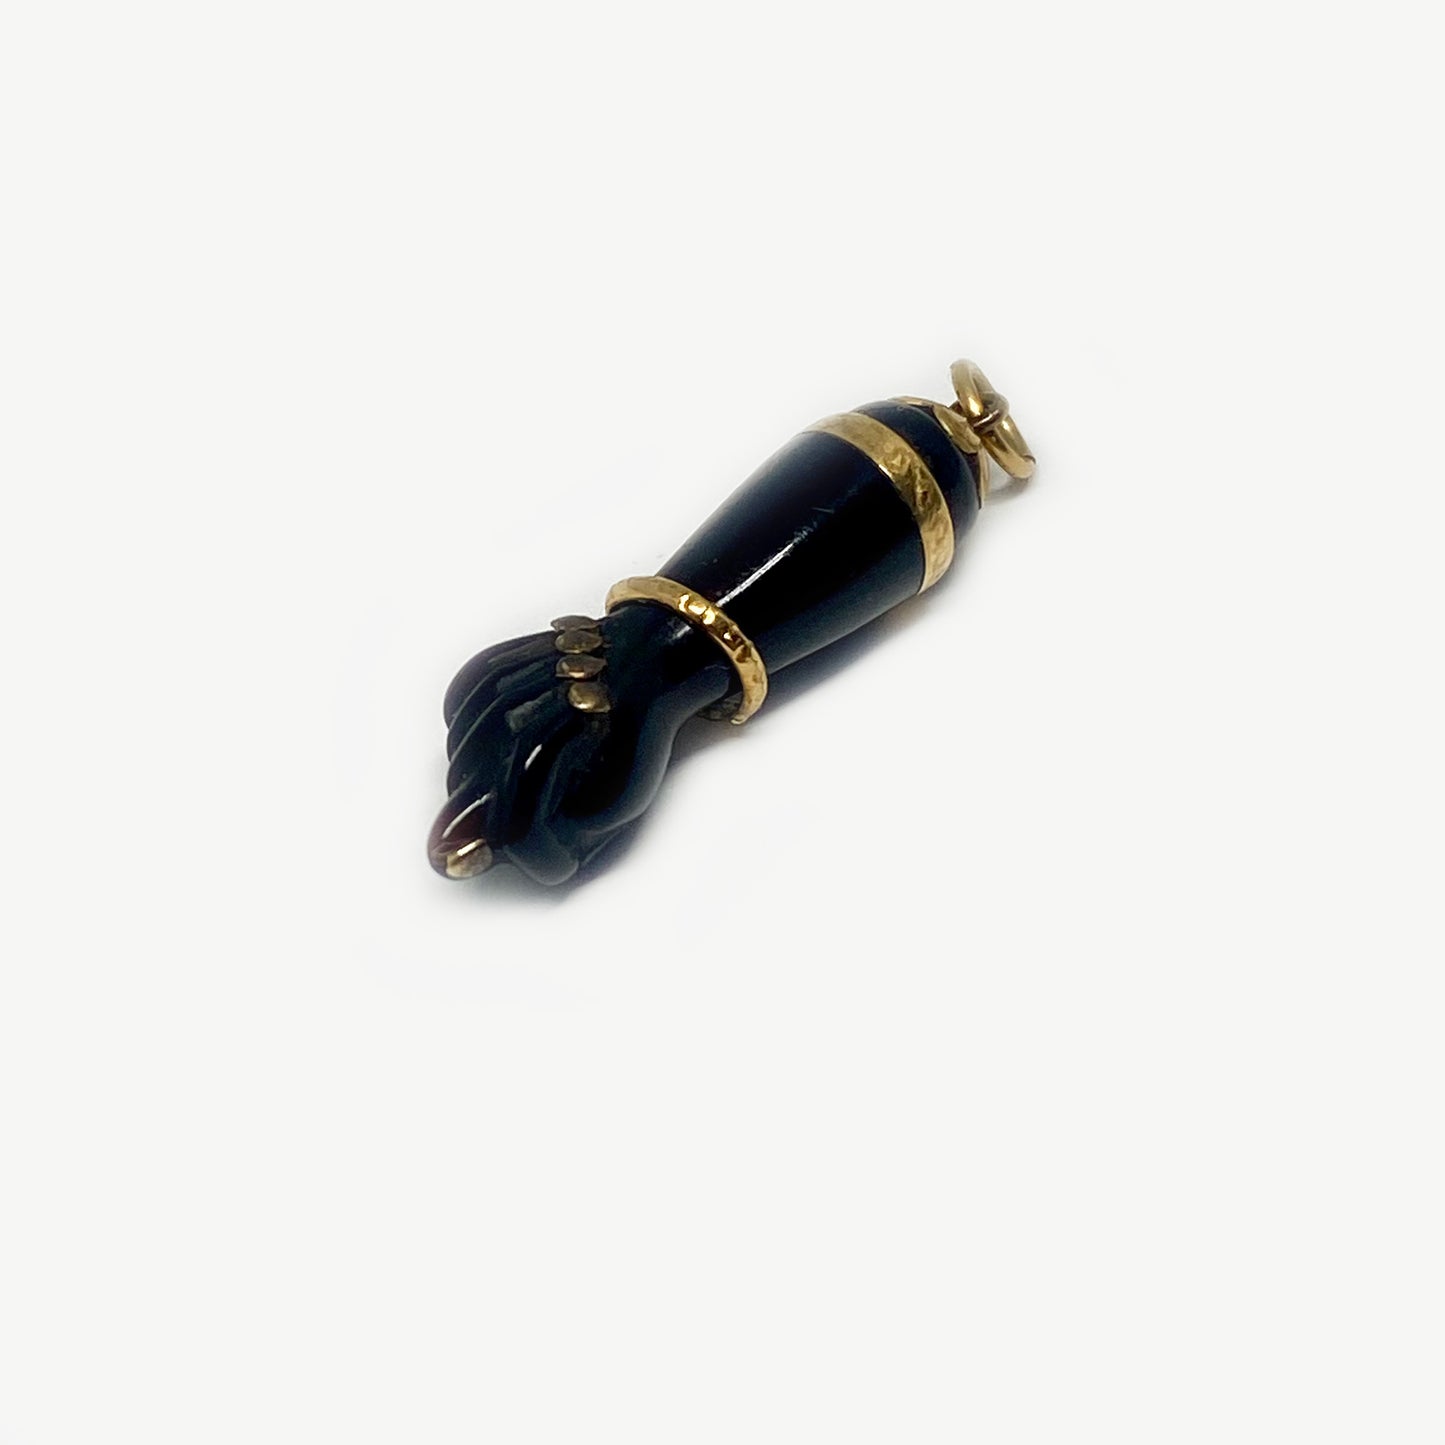 Antique 14k Gold Black Figa, Satined Horn Figa Charm